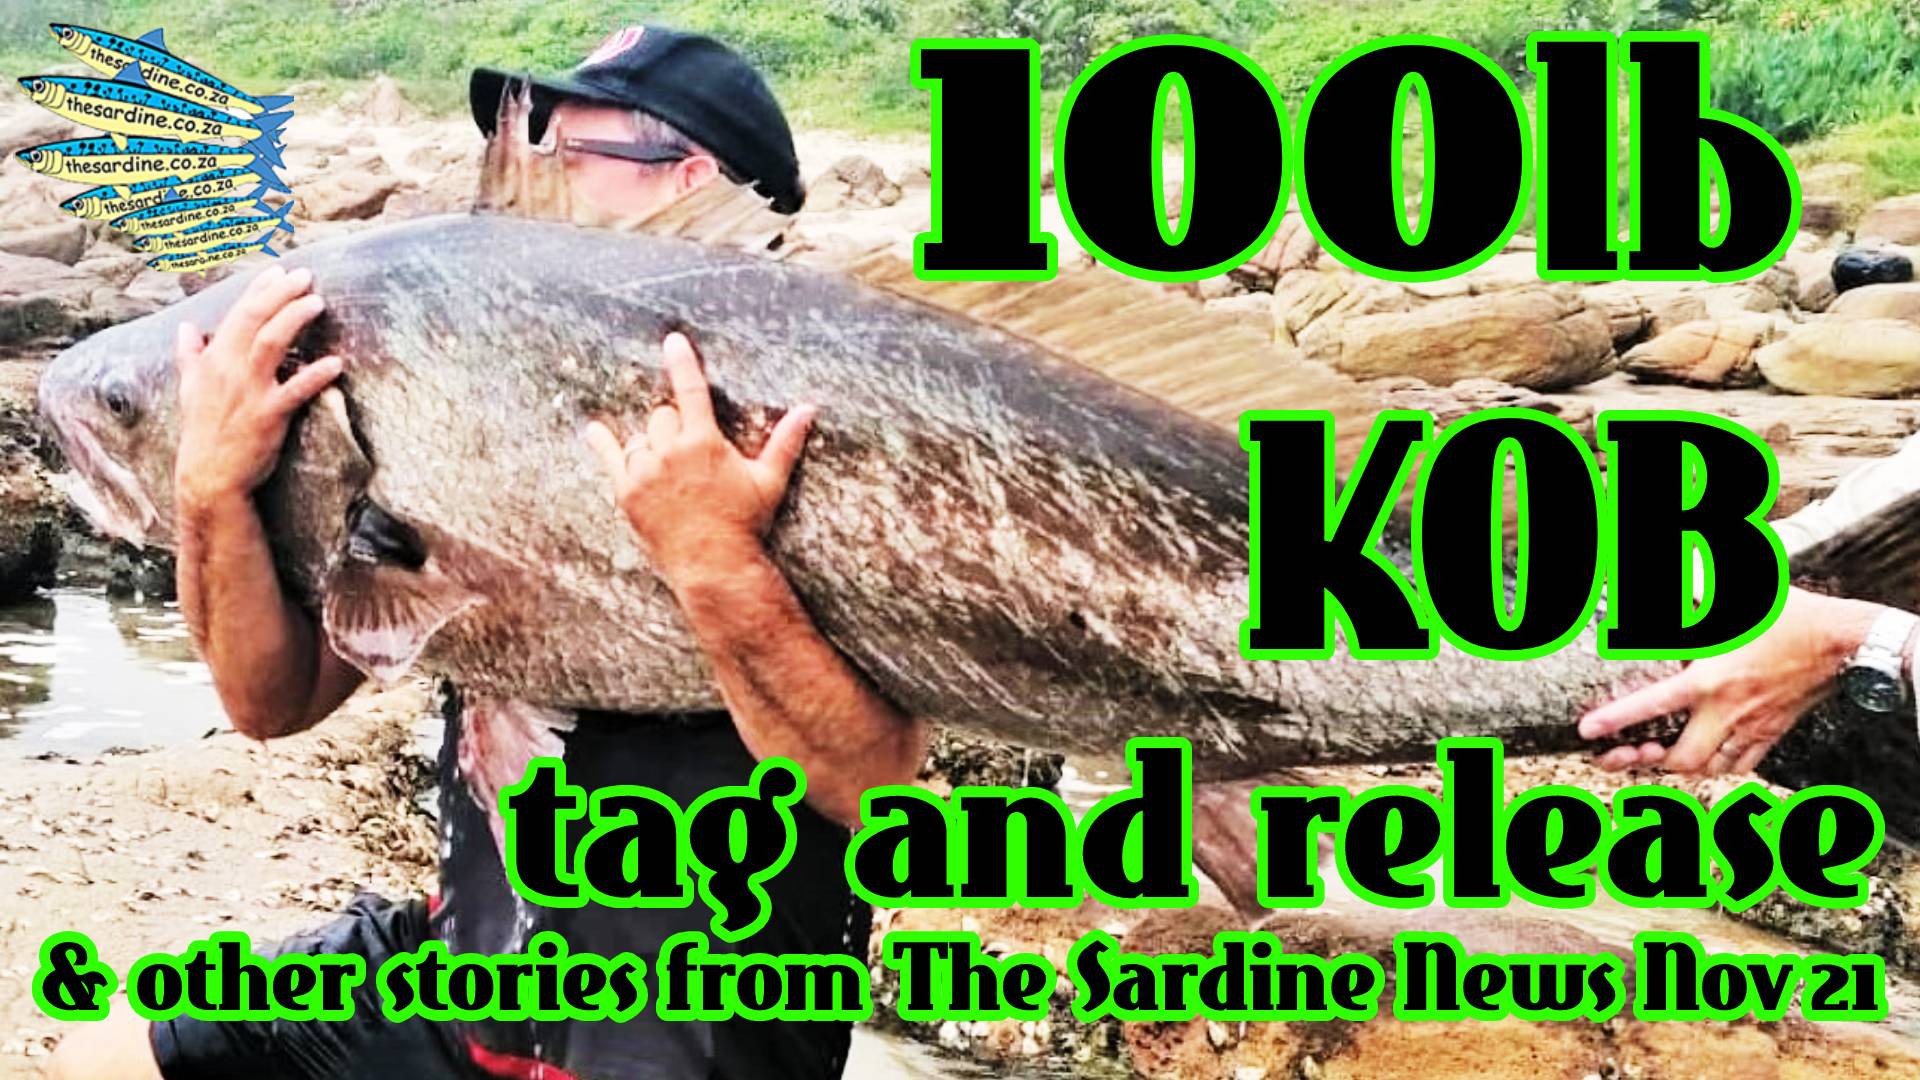 Catching Kob - The Sardine News